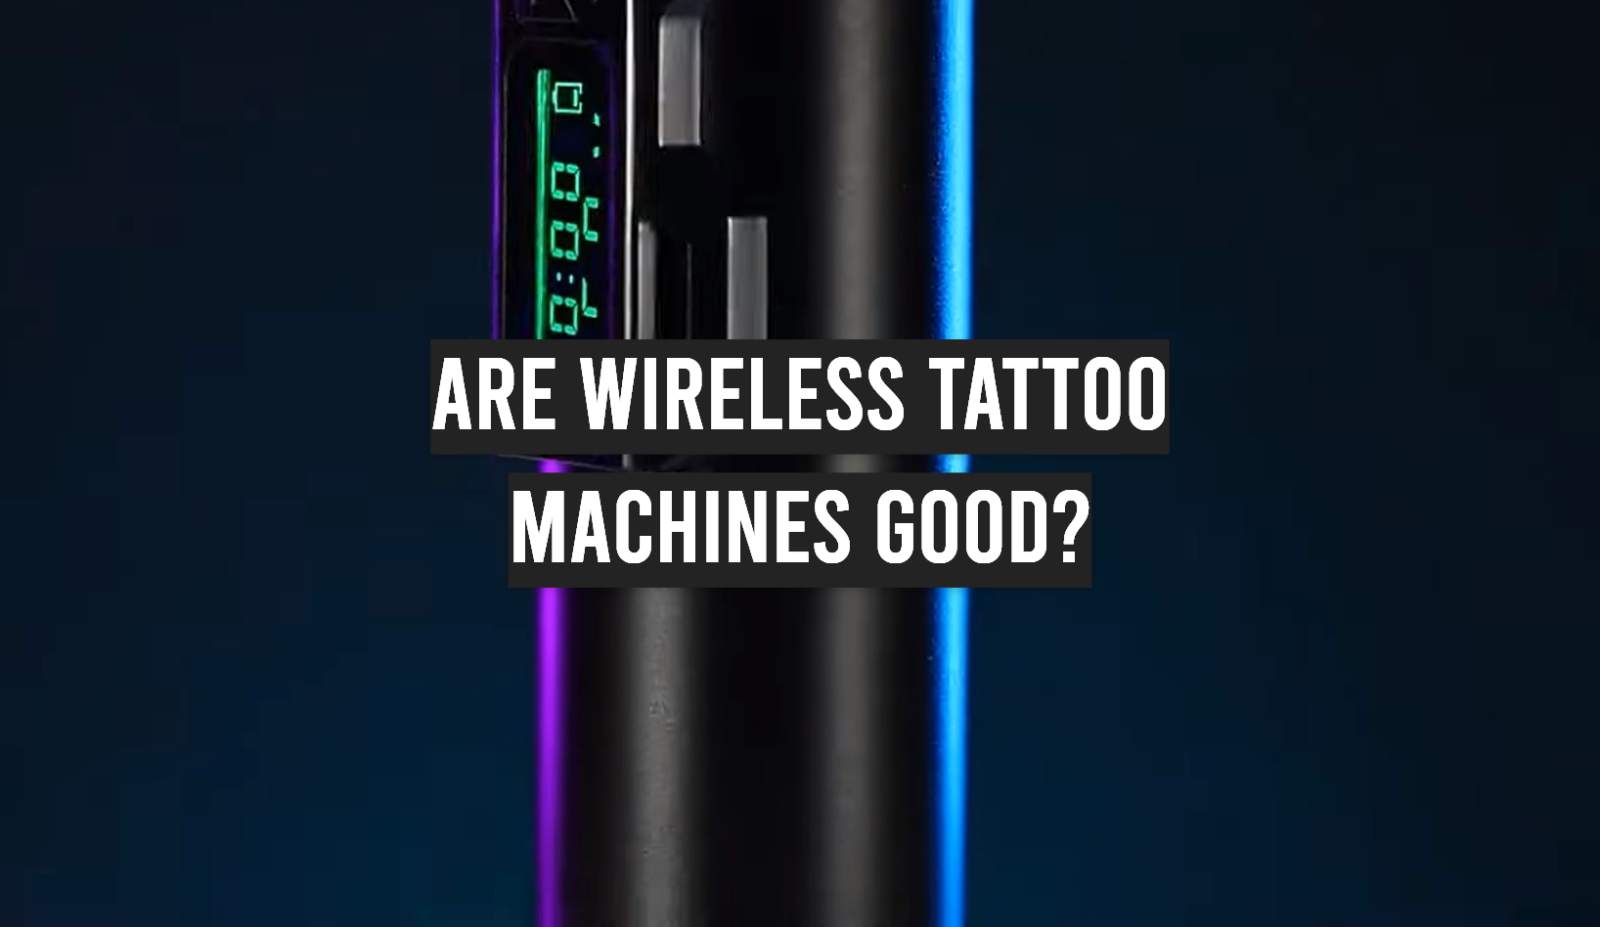 Are Wireless Tattoo Machines Good?